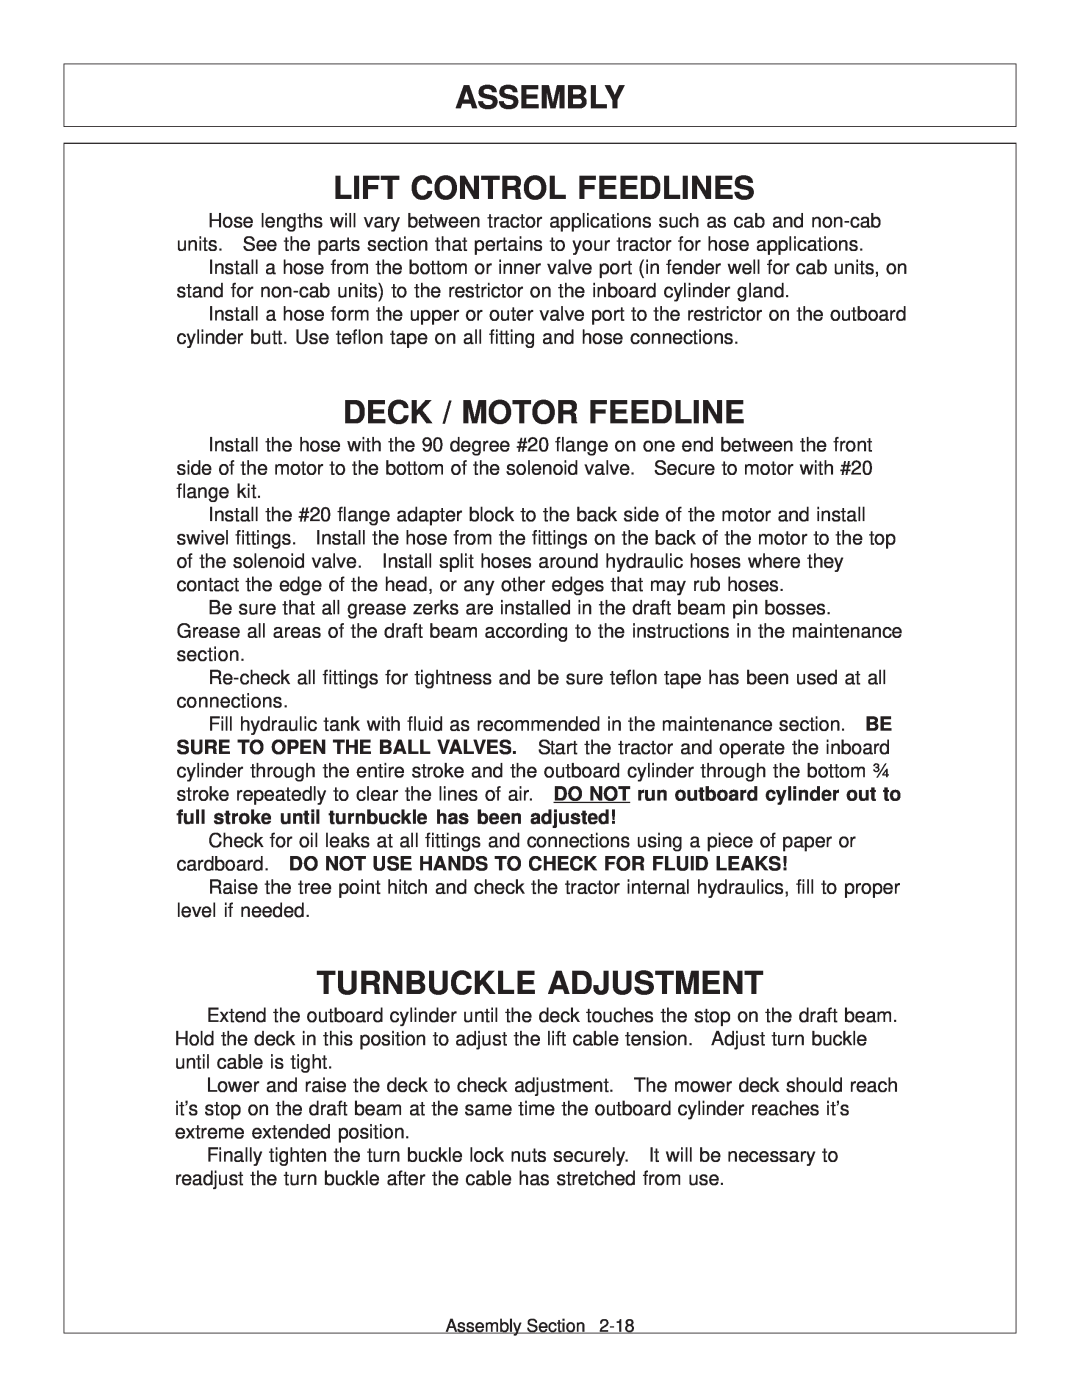 Tiger Products Co., Ltd JD 72-7520 manual Assembly Lift Control Feedlines, Deck / Motor Feedline, Turnbuckle Adjustment 